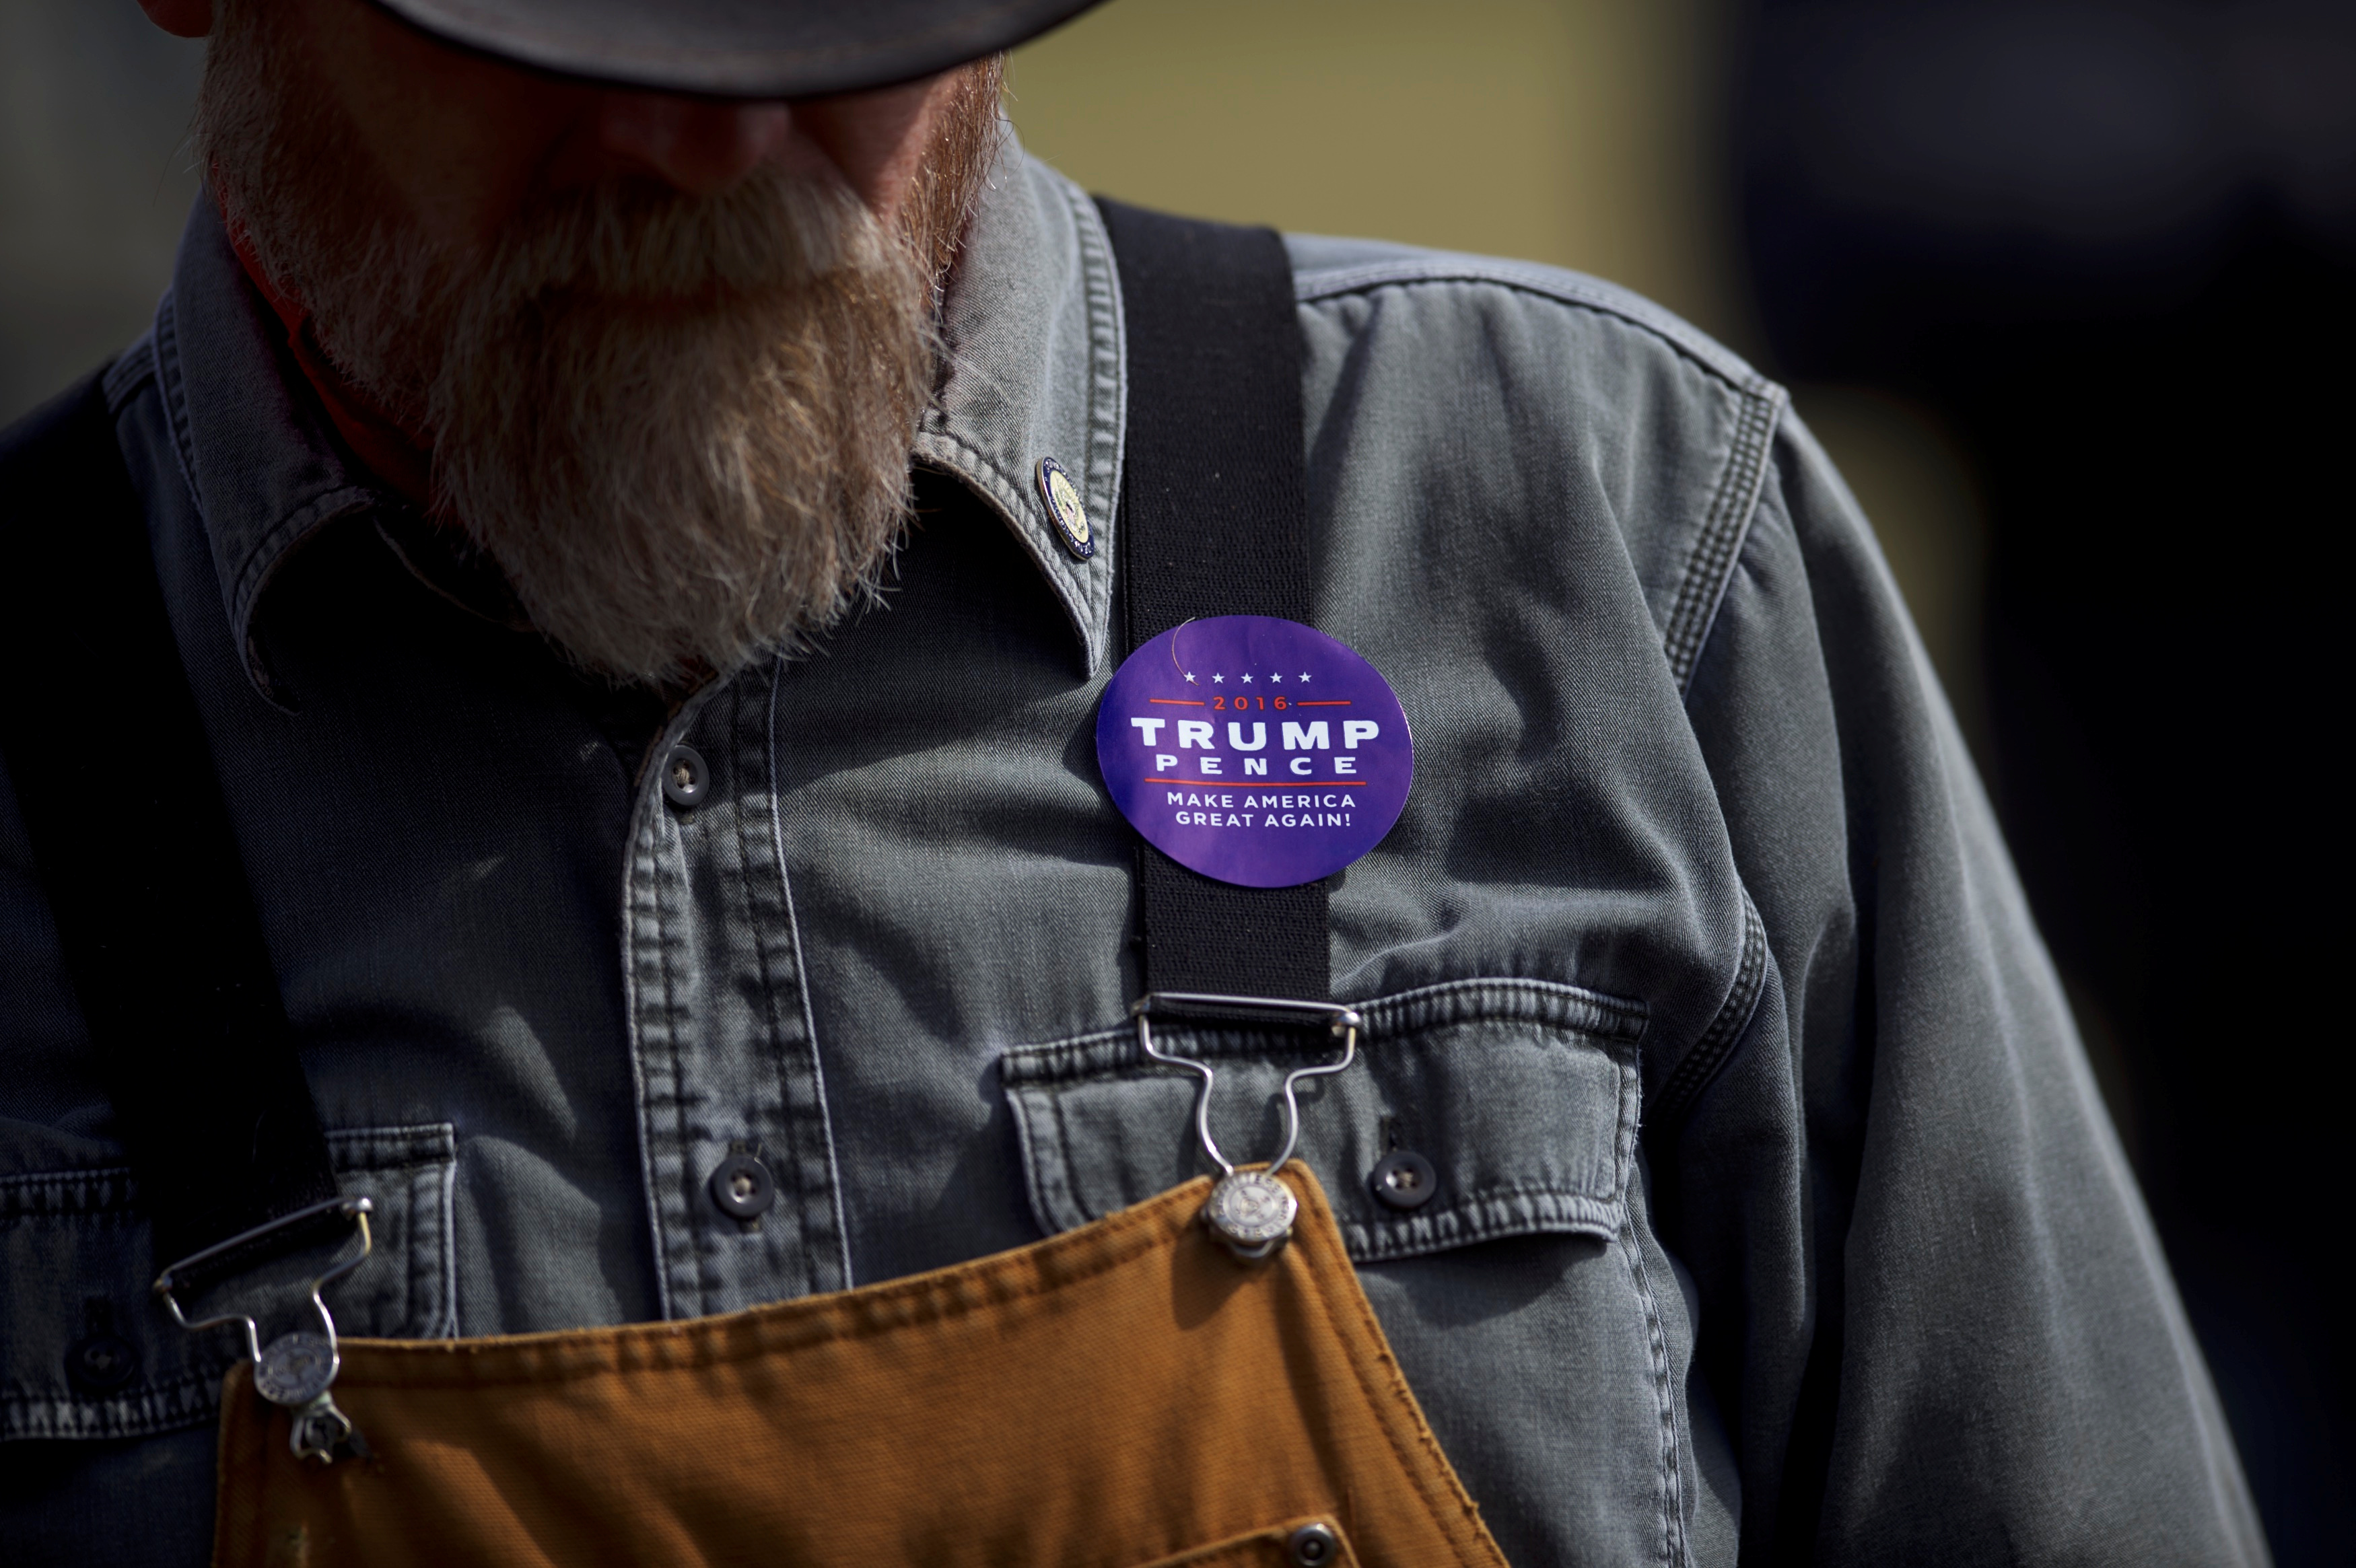 A Trump supporter in Pennsylvania.